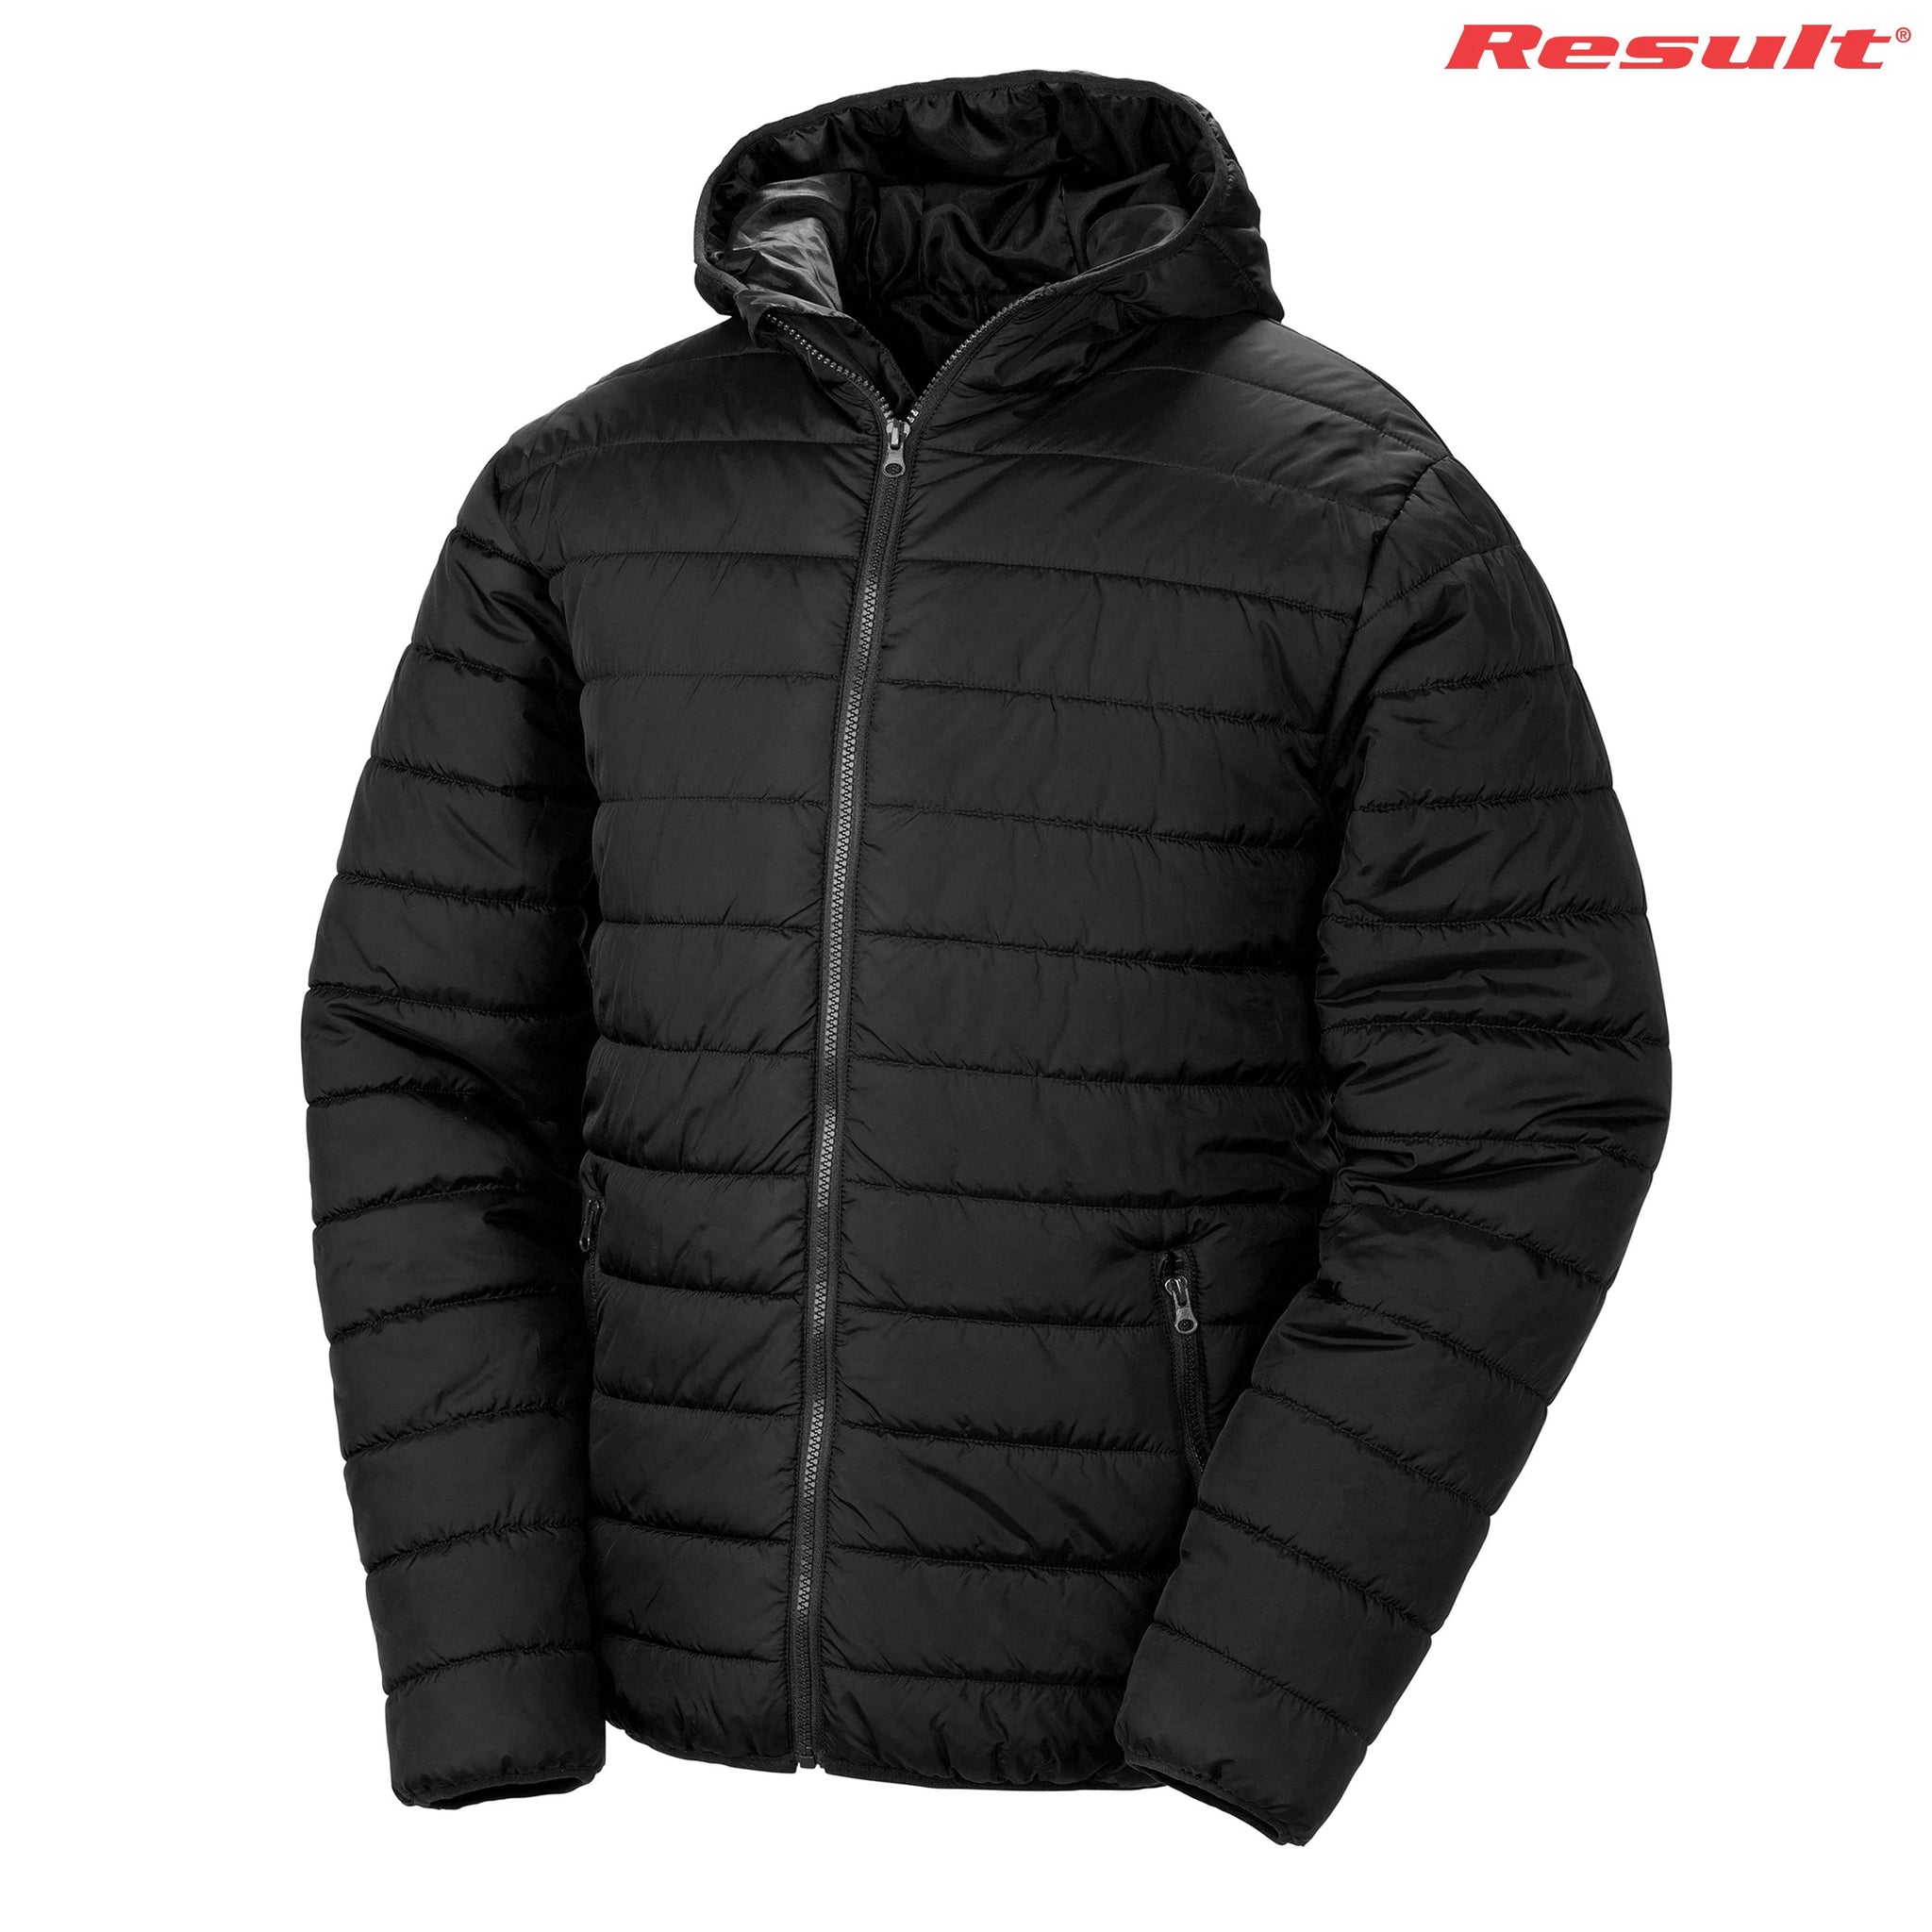 Jackets - R233M Result Adult Soft Padded Jacket